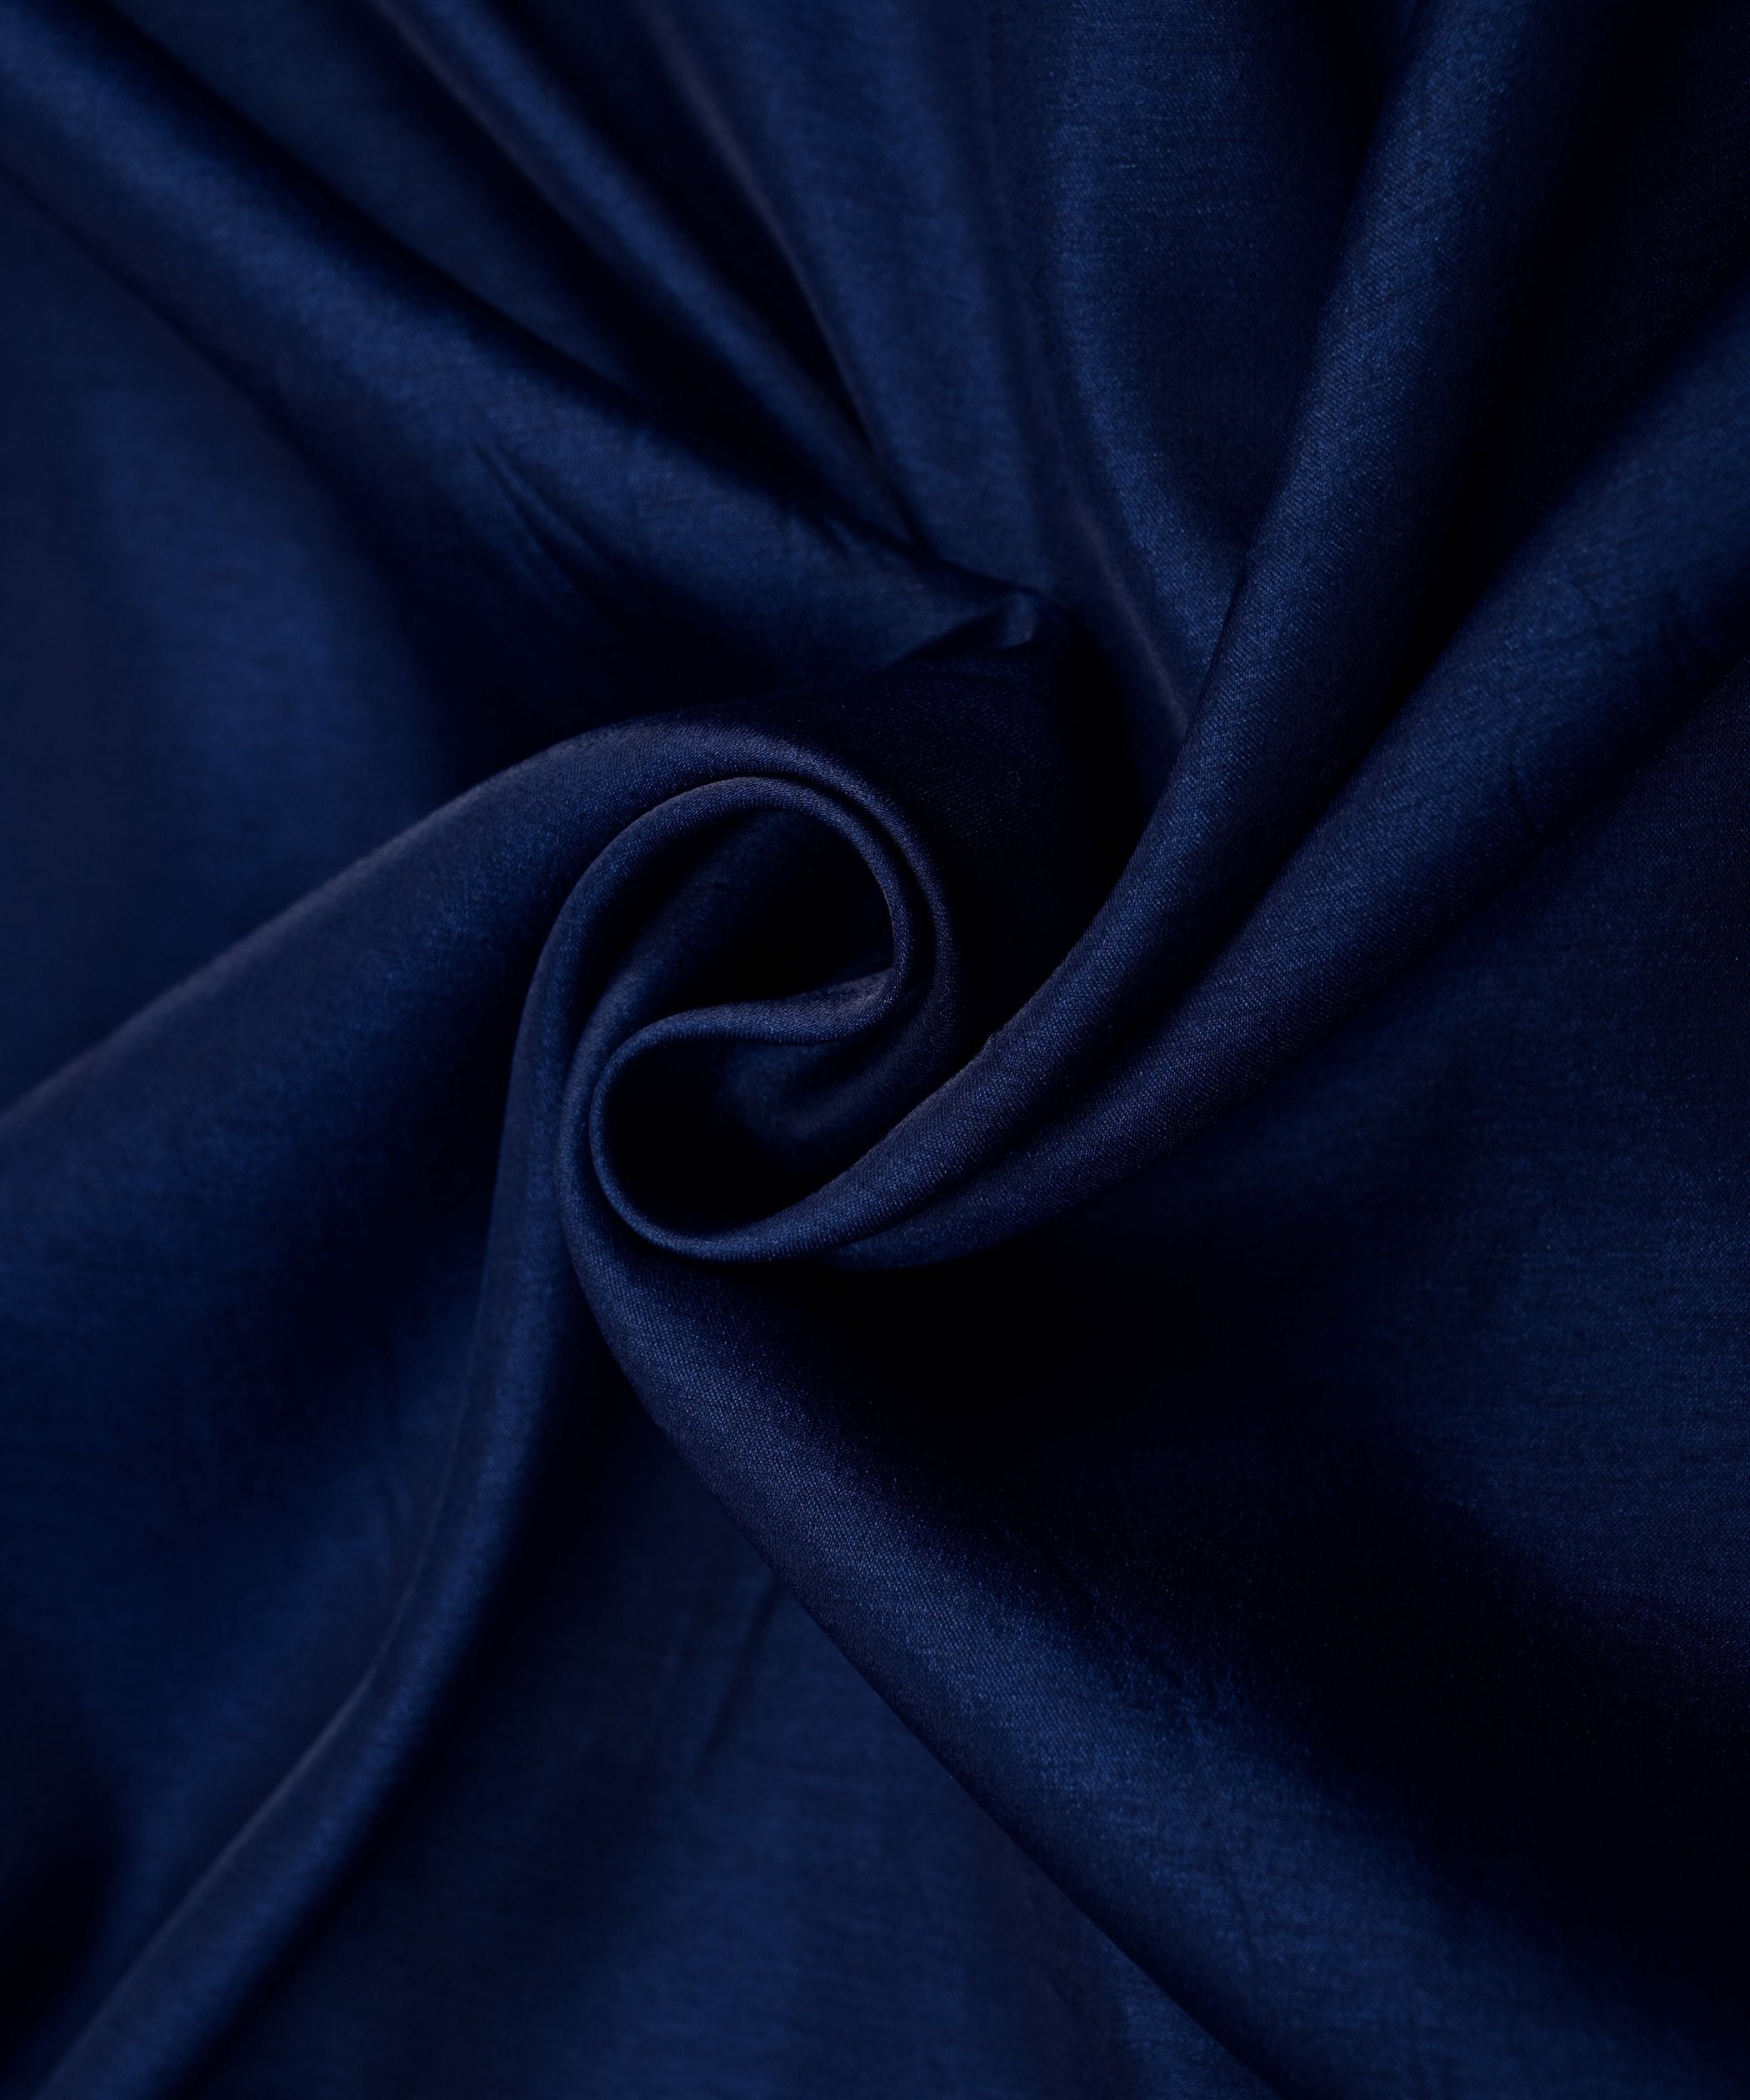 Navy Blue Plain Dyed Tussar Silk Fabric